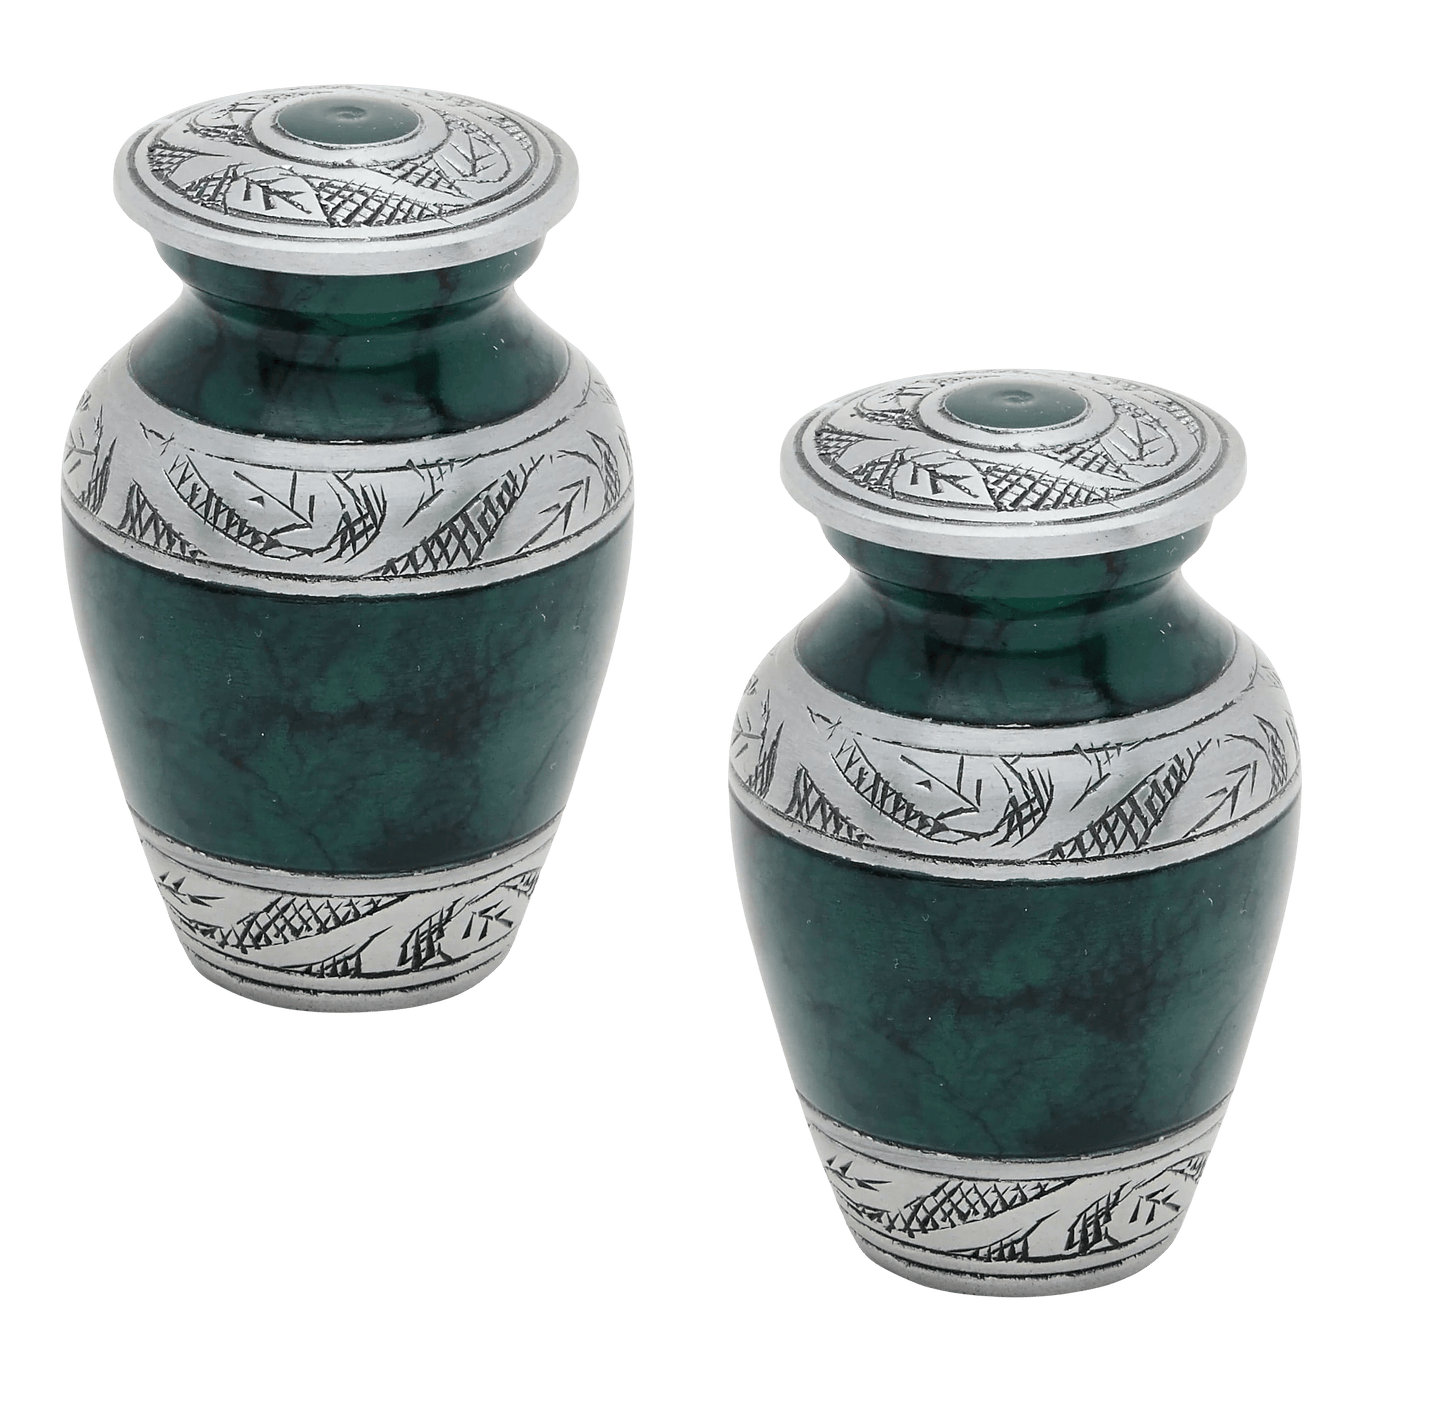 Pair of Keepsake Urns - Green | Colorful Keepsake Urns